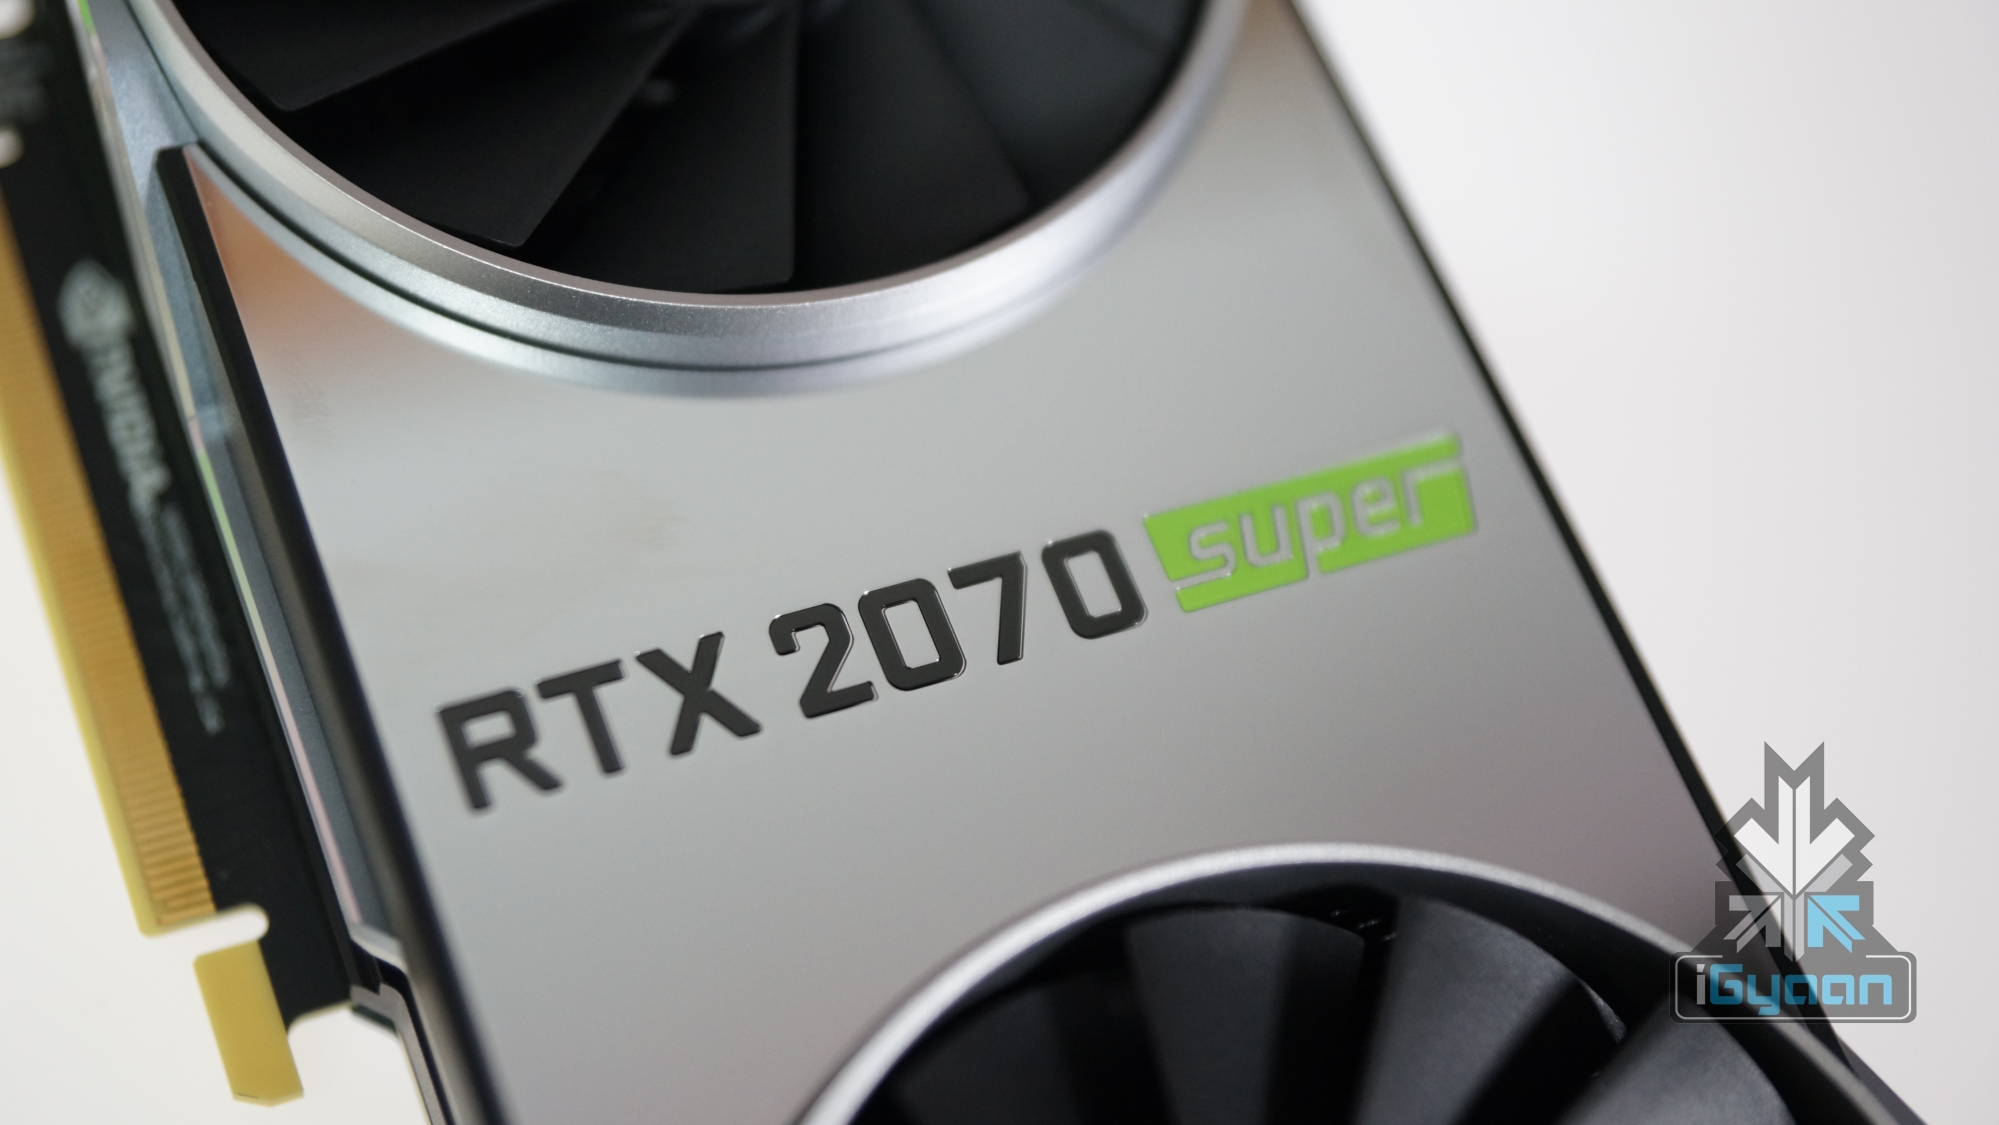 NVIDIA RTX 2070 SUPER